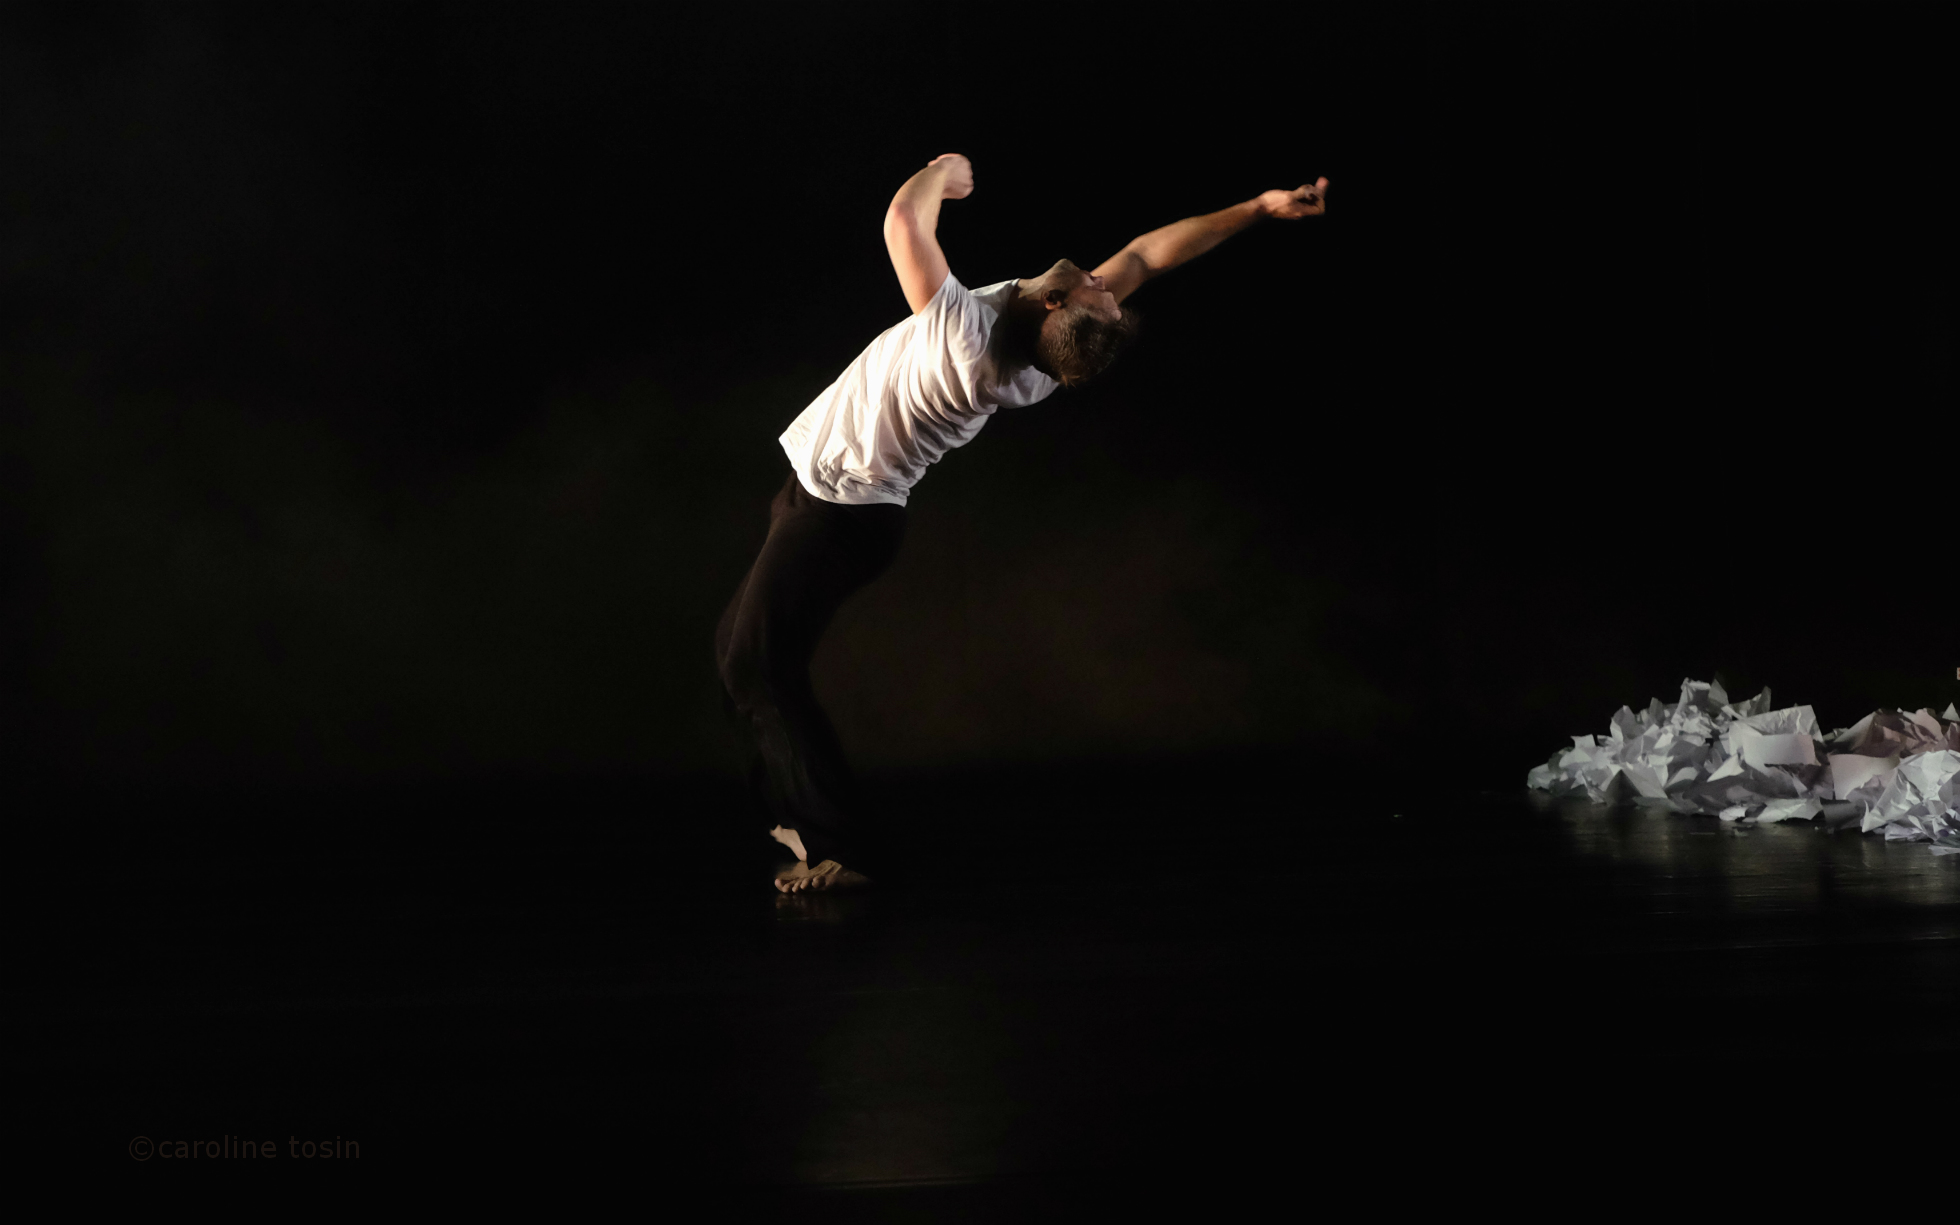  Image: Caroline Tosin.&nbsp; Dancer:&nbsp;Vince Virr.&nbsp; 